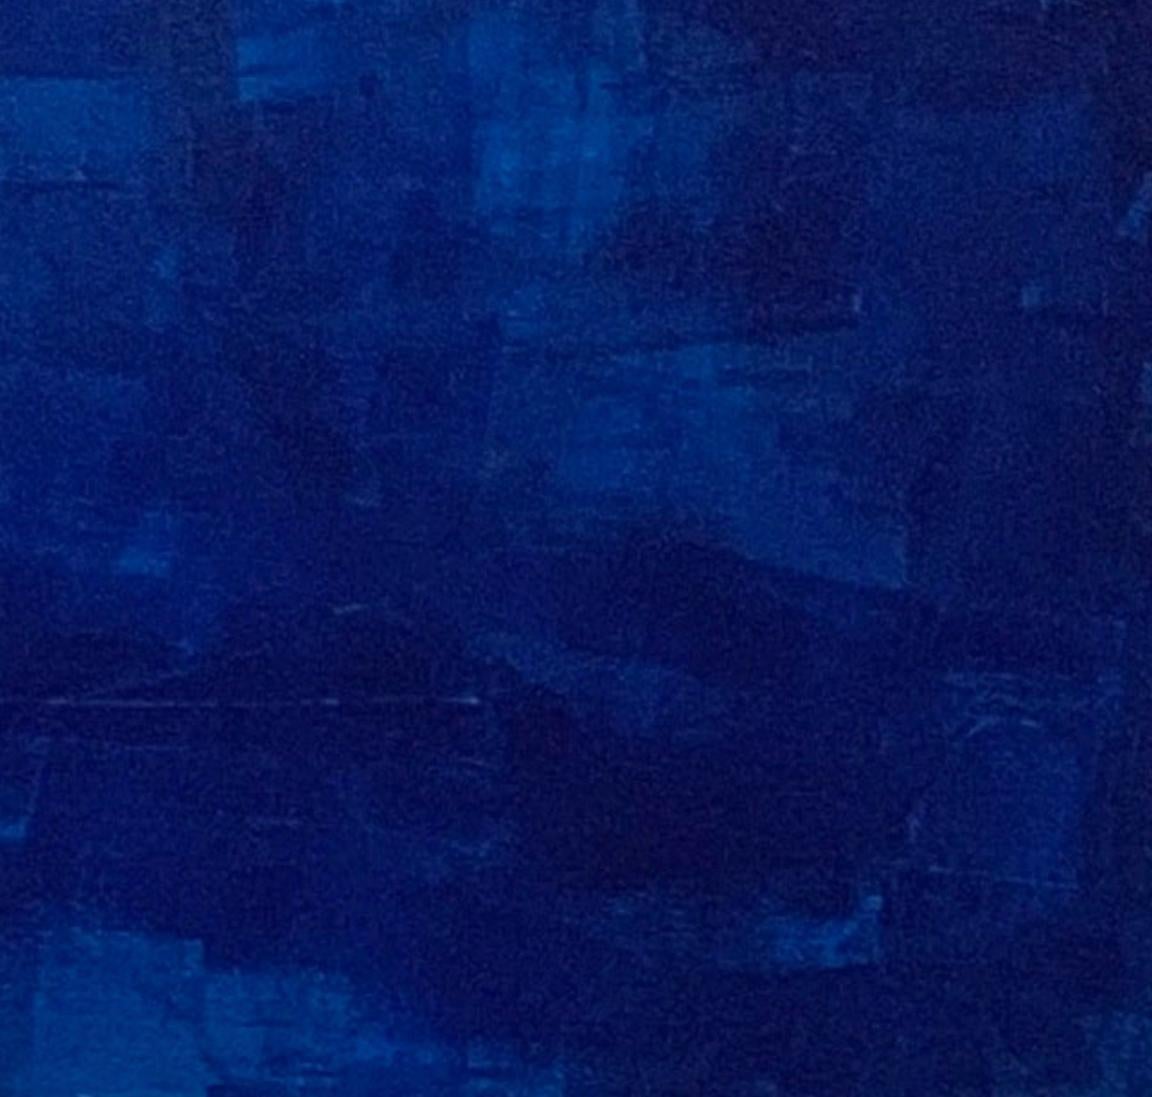 La mer profonde, océan contemporain, bleu foncé, essence de l'océan, art de Floride en vente 5